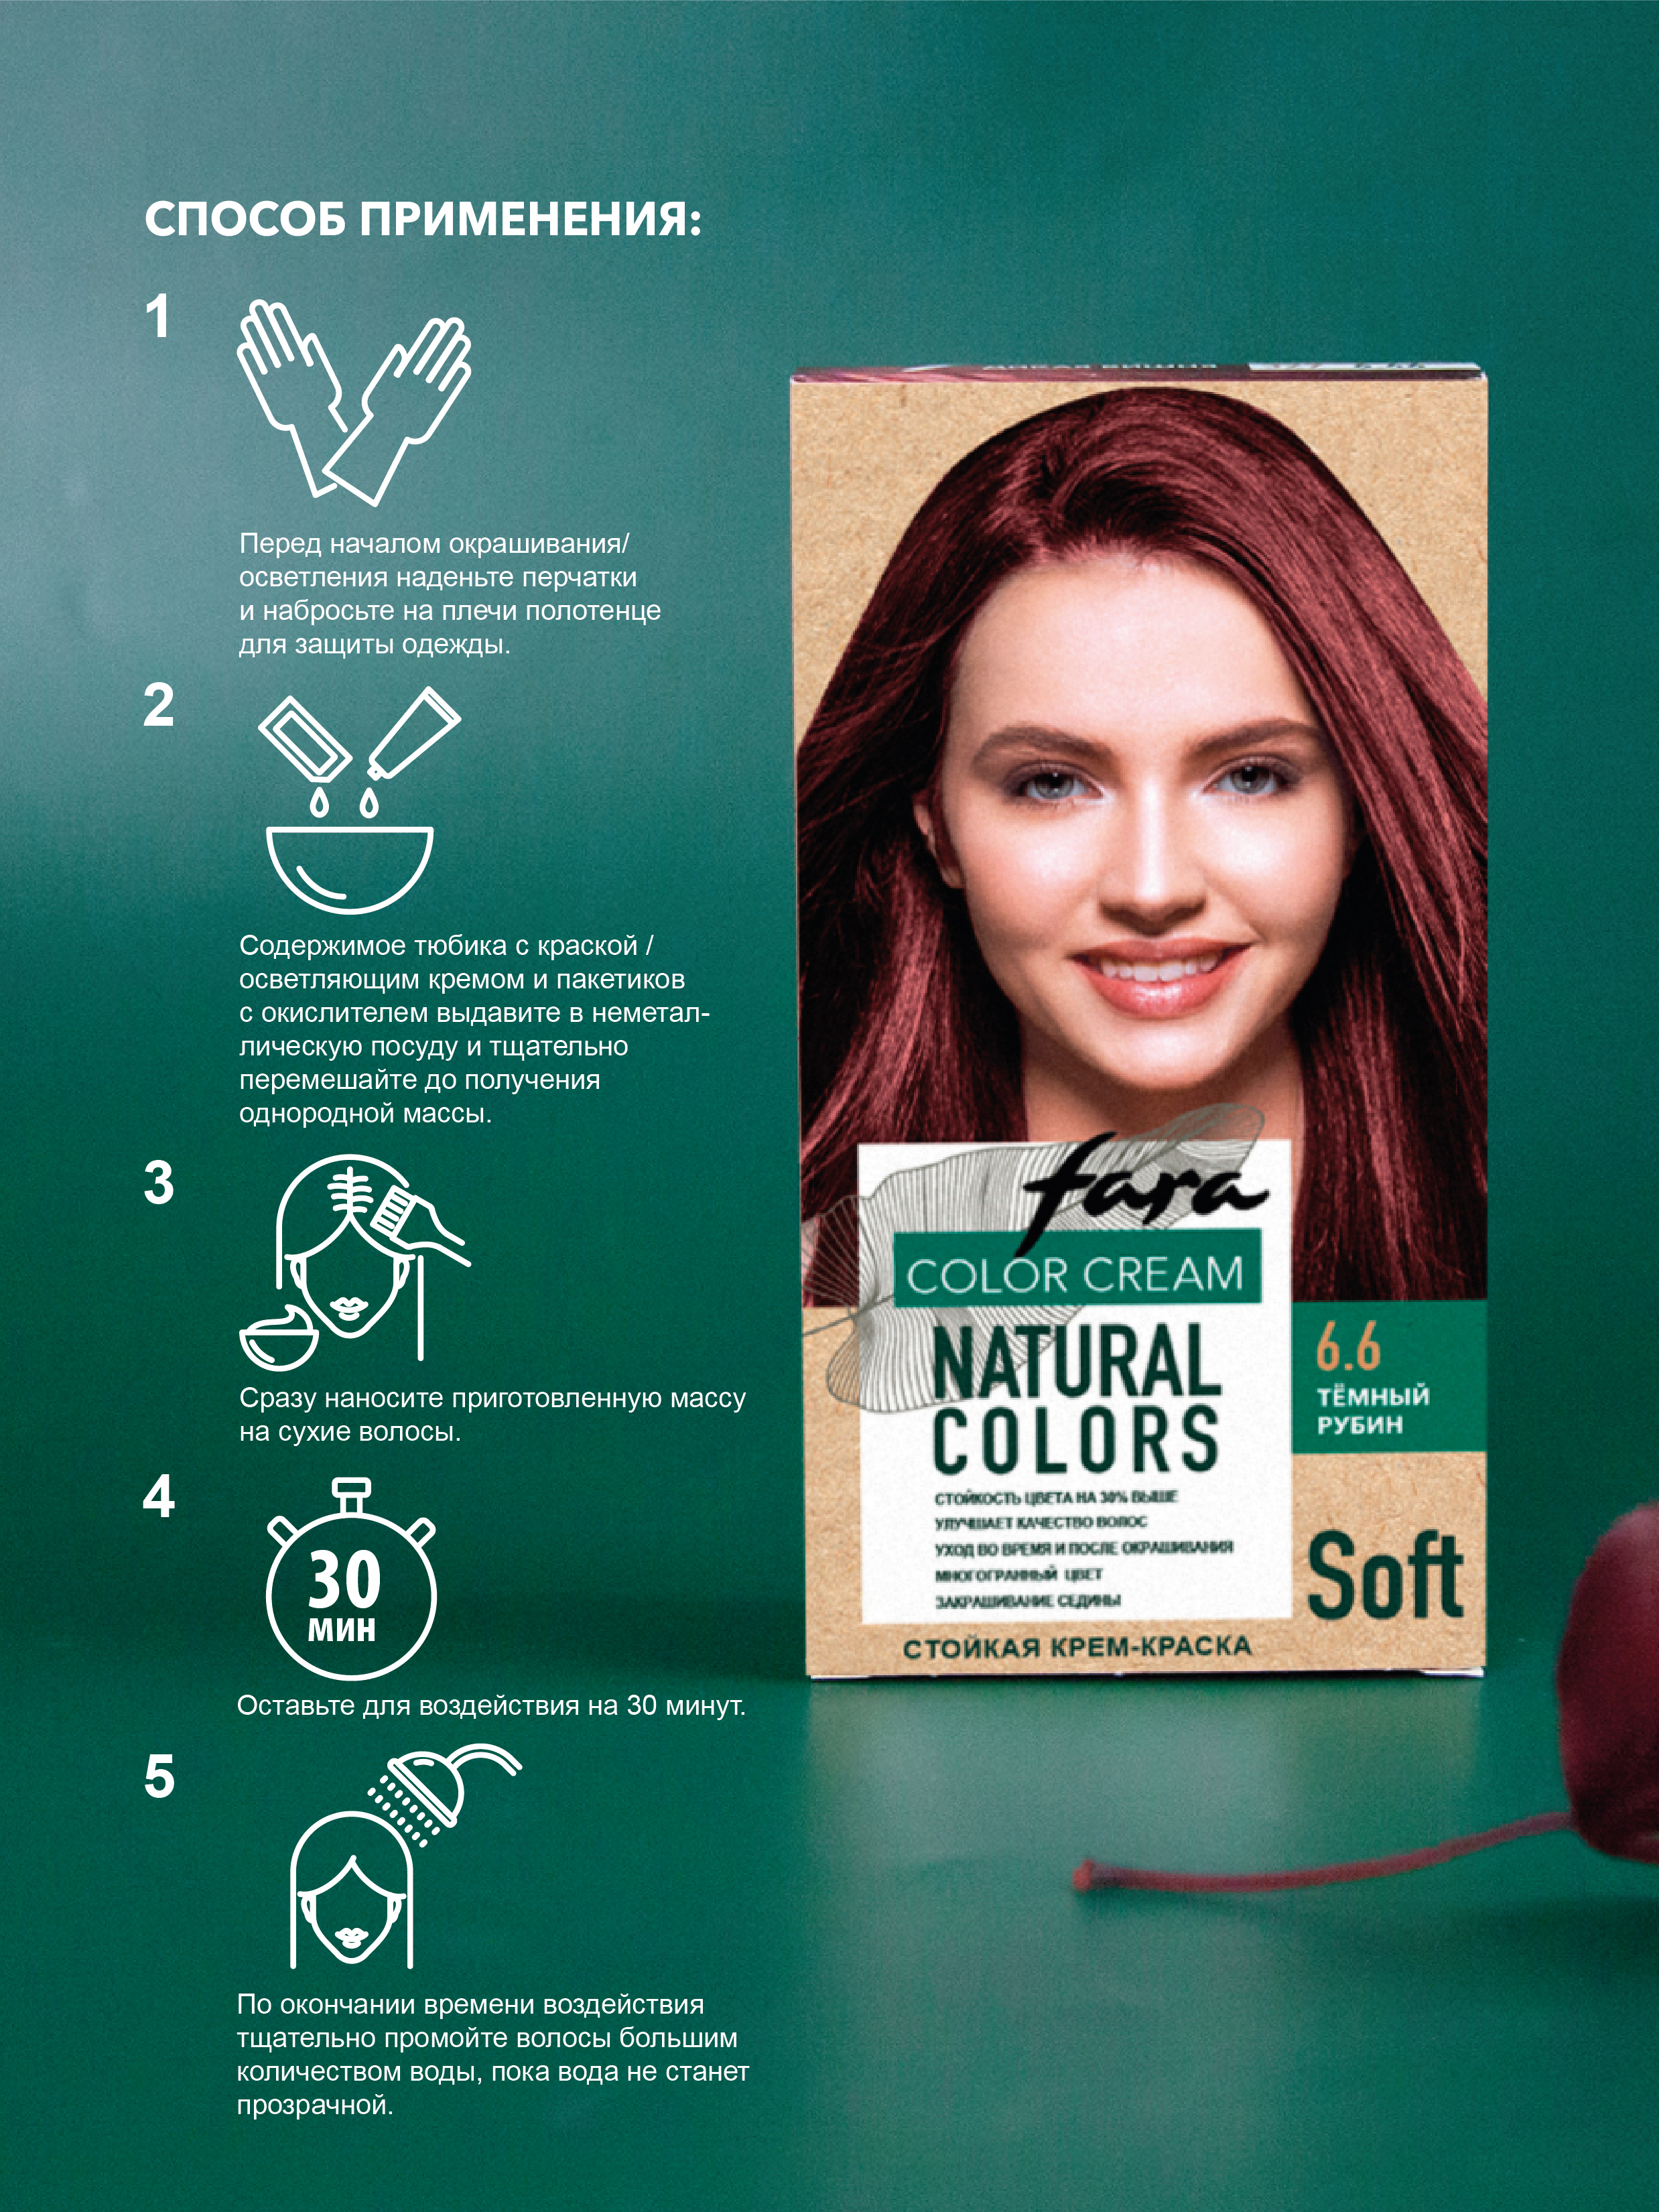 Краска для волос FARA Natural Colors Soft 324 темный рубин - фото 6